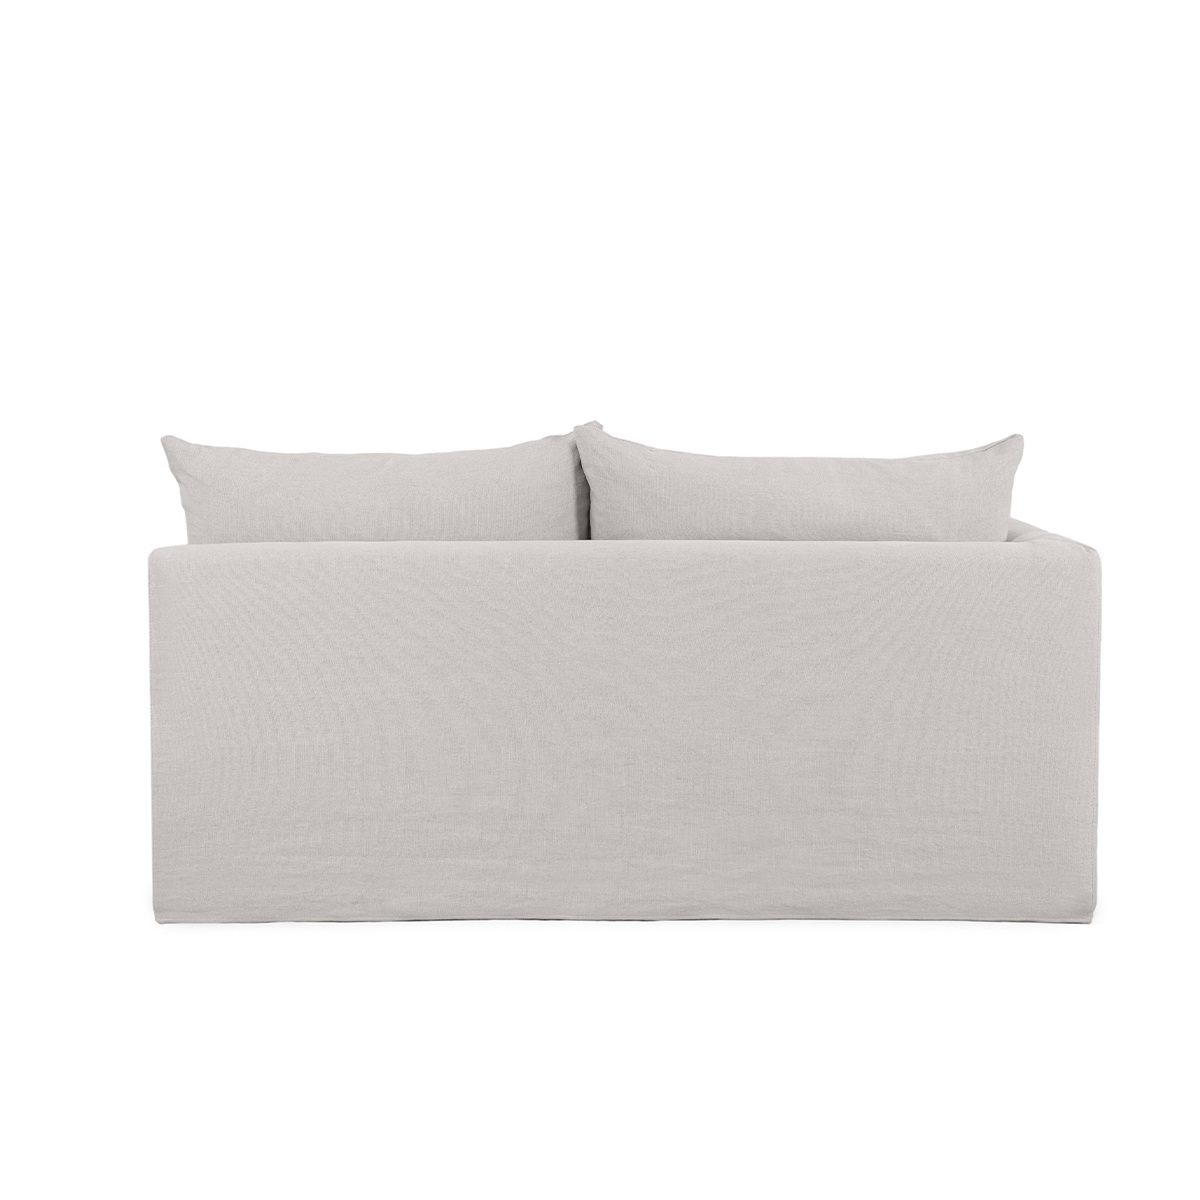 SuperBox sofa - Right armrest, L51 x D71 x H34 in - Cotton - image 5